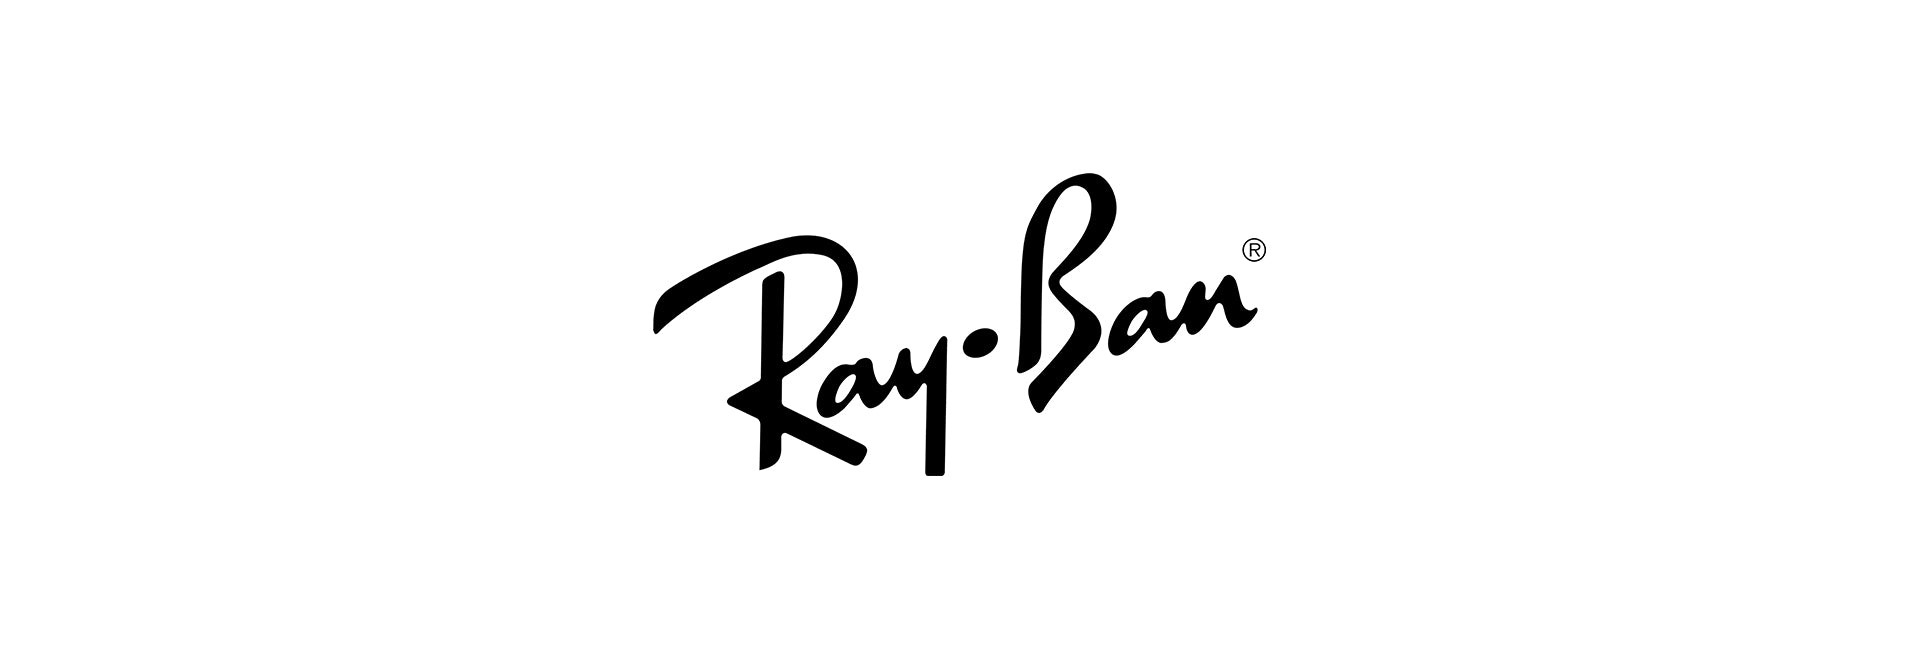 Ray-Ban Collection – Vision Express